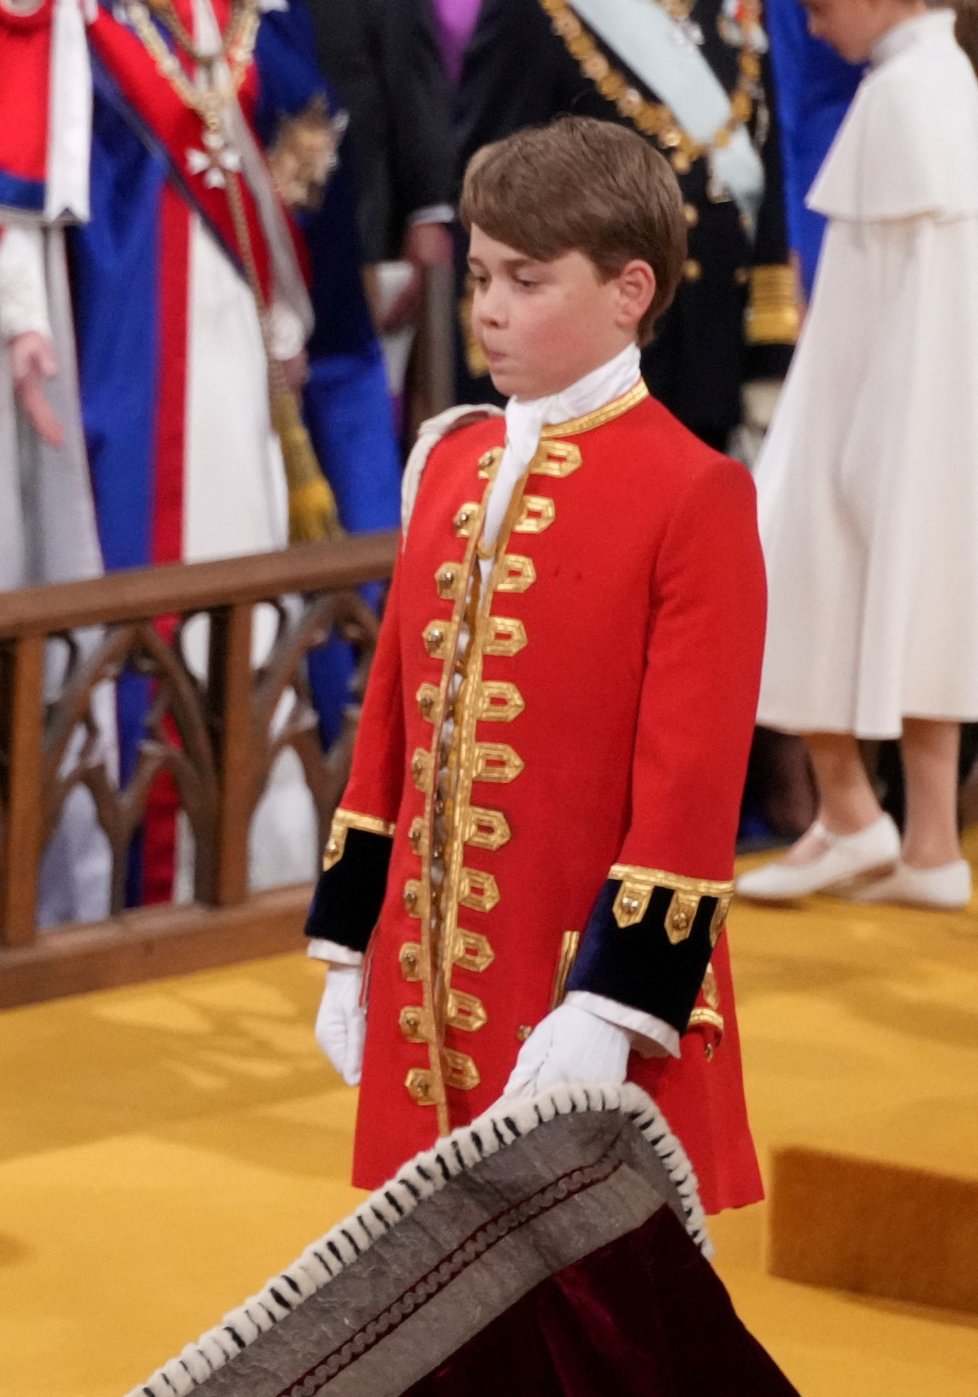 Korunovace krále Karla III.: Princ George mezi pážaty